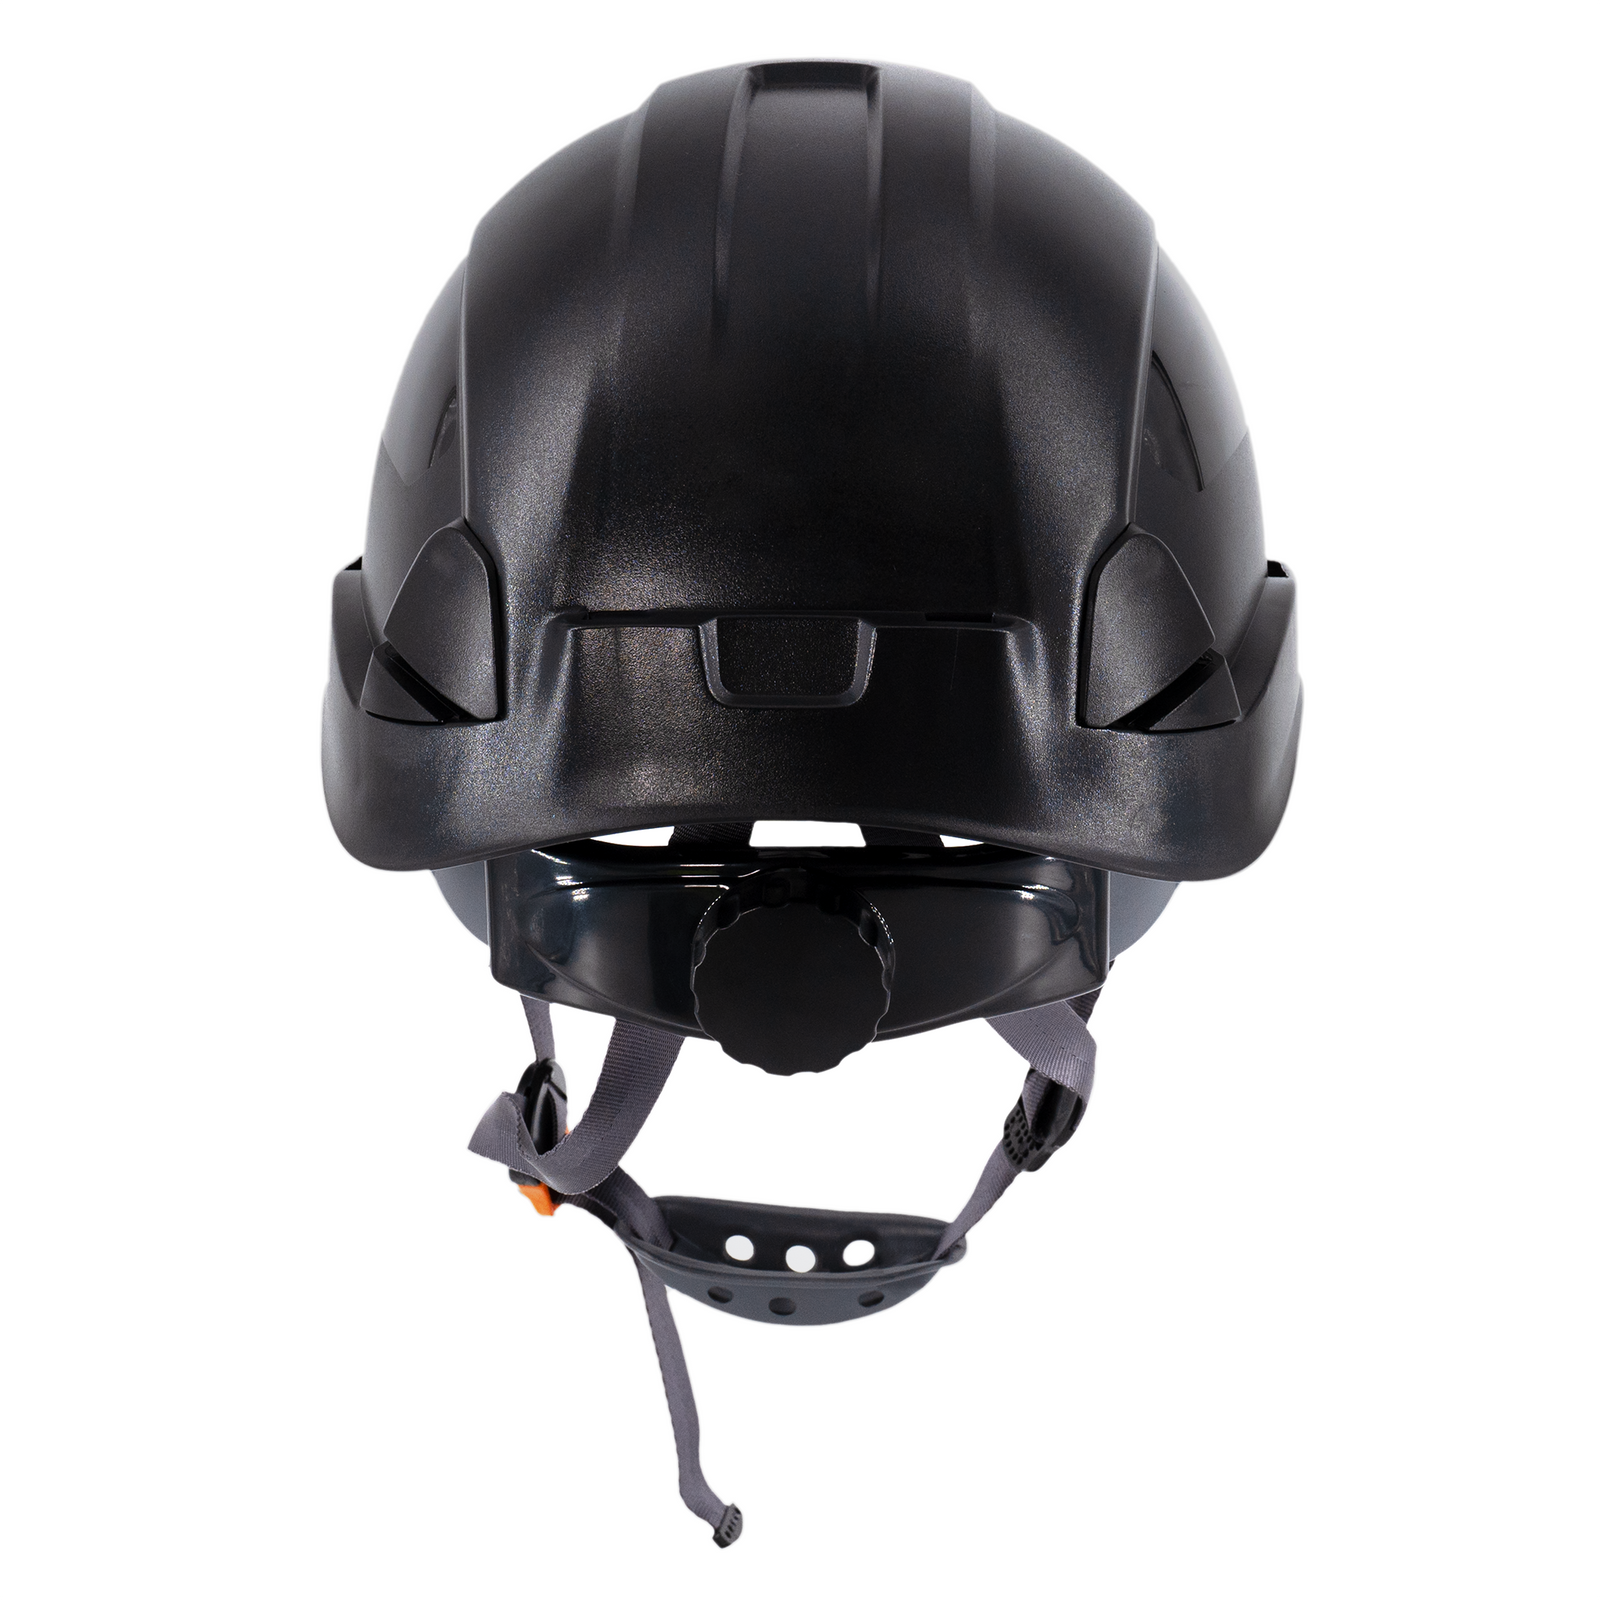 Adjustable Climbing Helmets Safety Hard Hat Head Guard 55-61cm